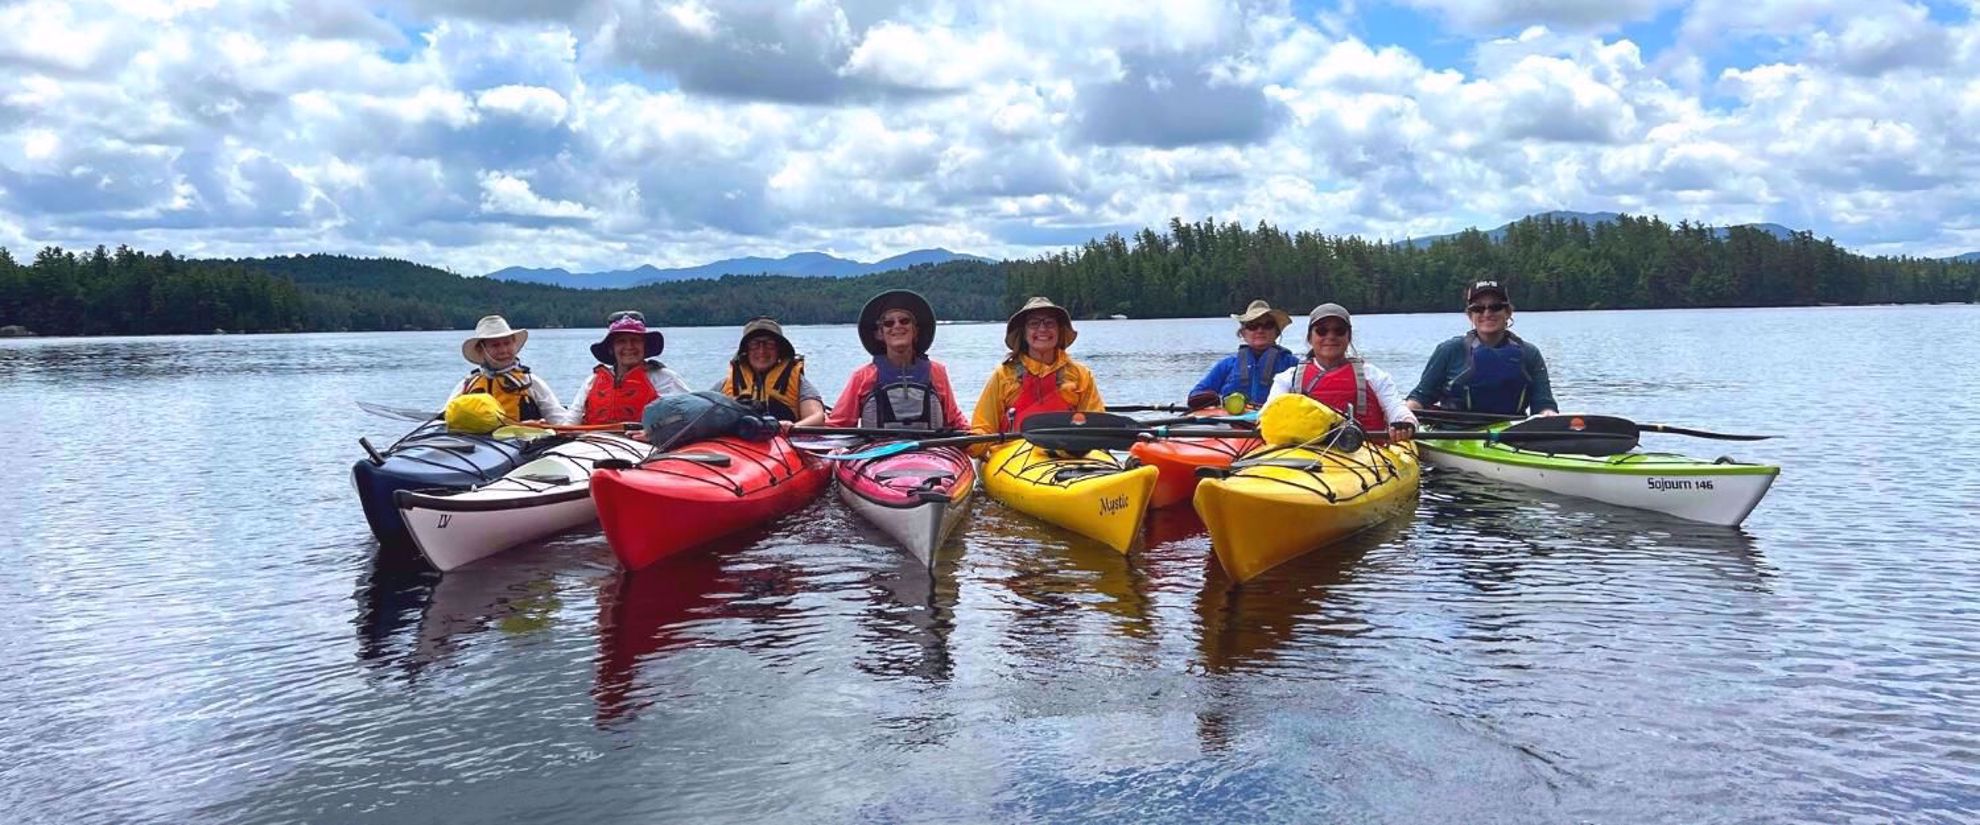 Women's active travel in the Adirondacks